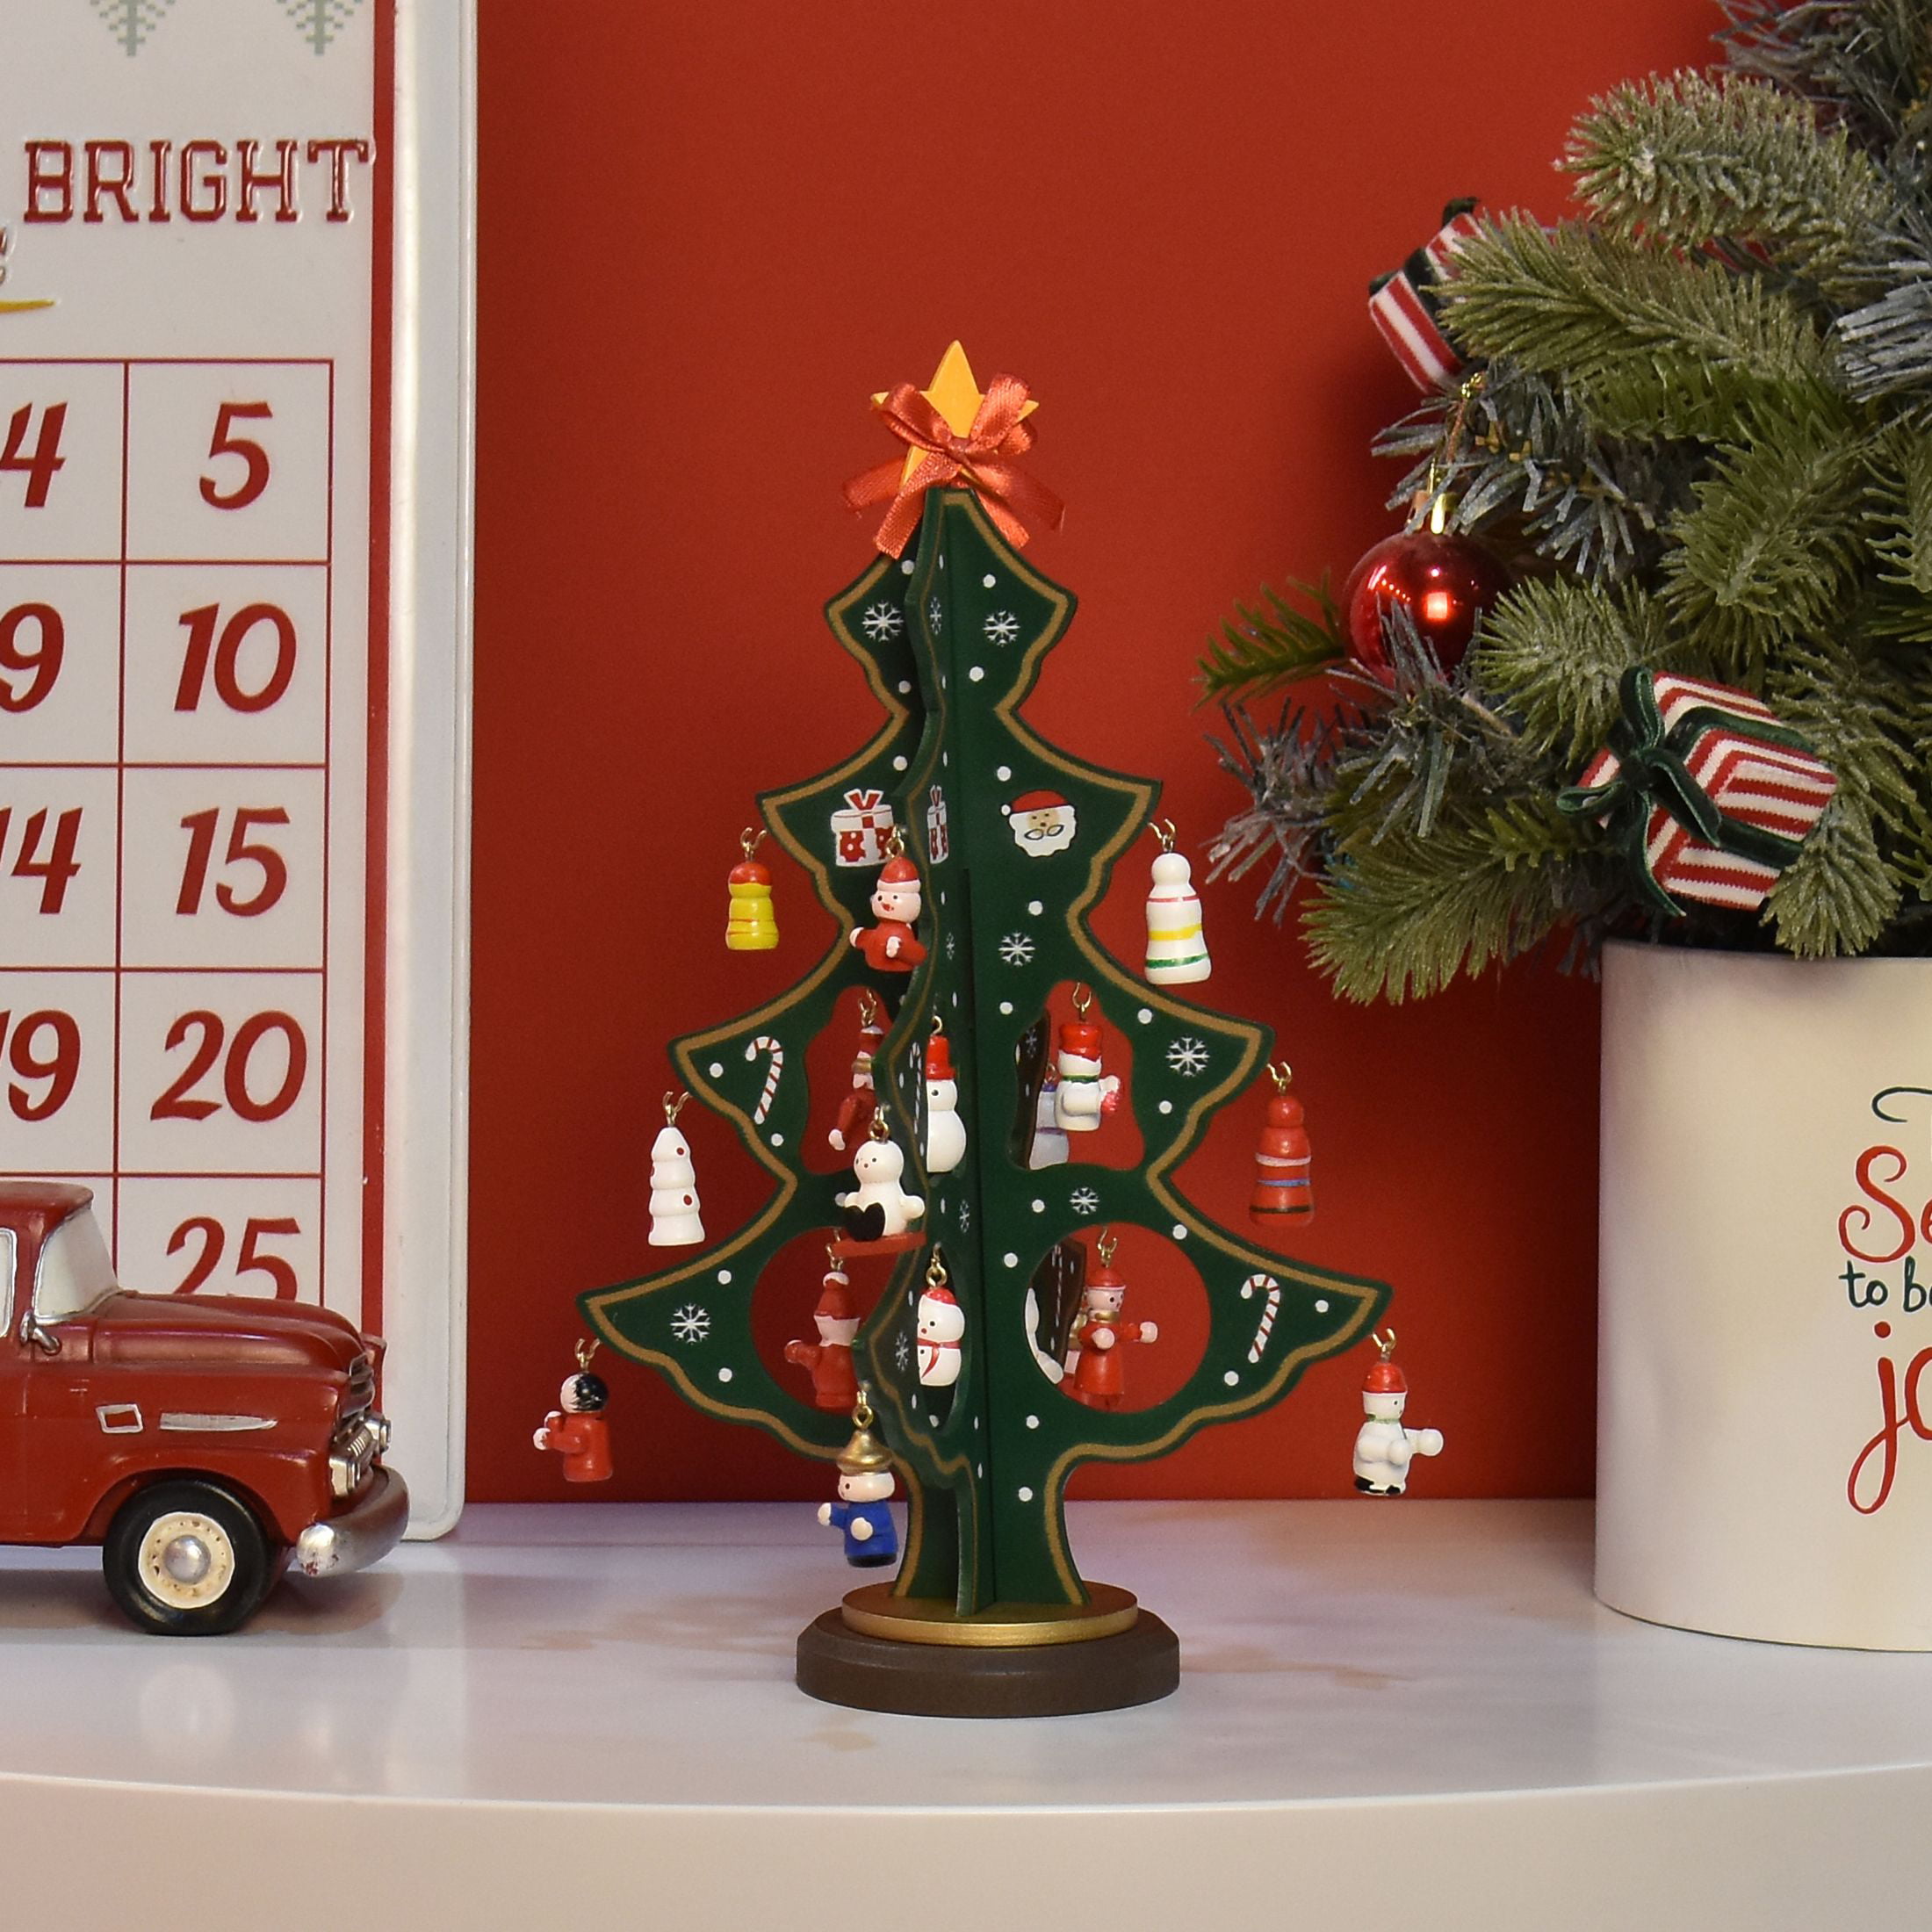 Crimson, Wood, and White Christmas Tree